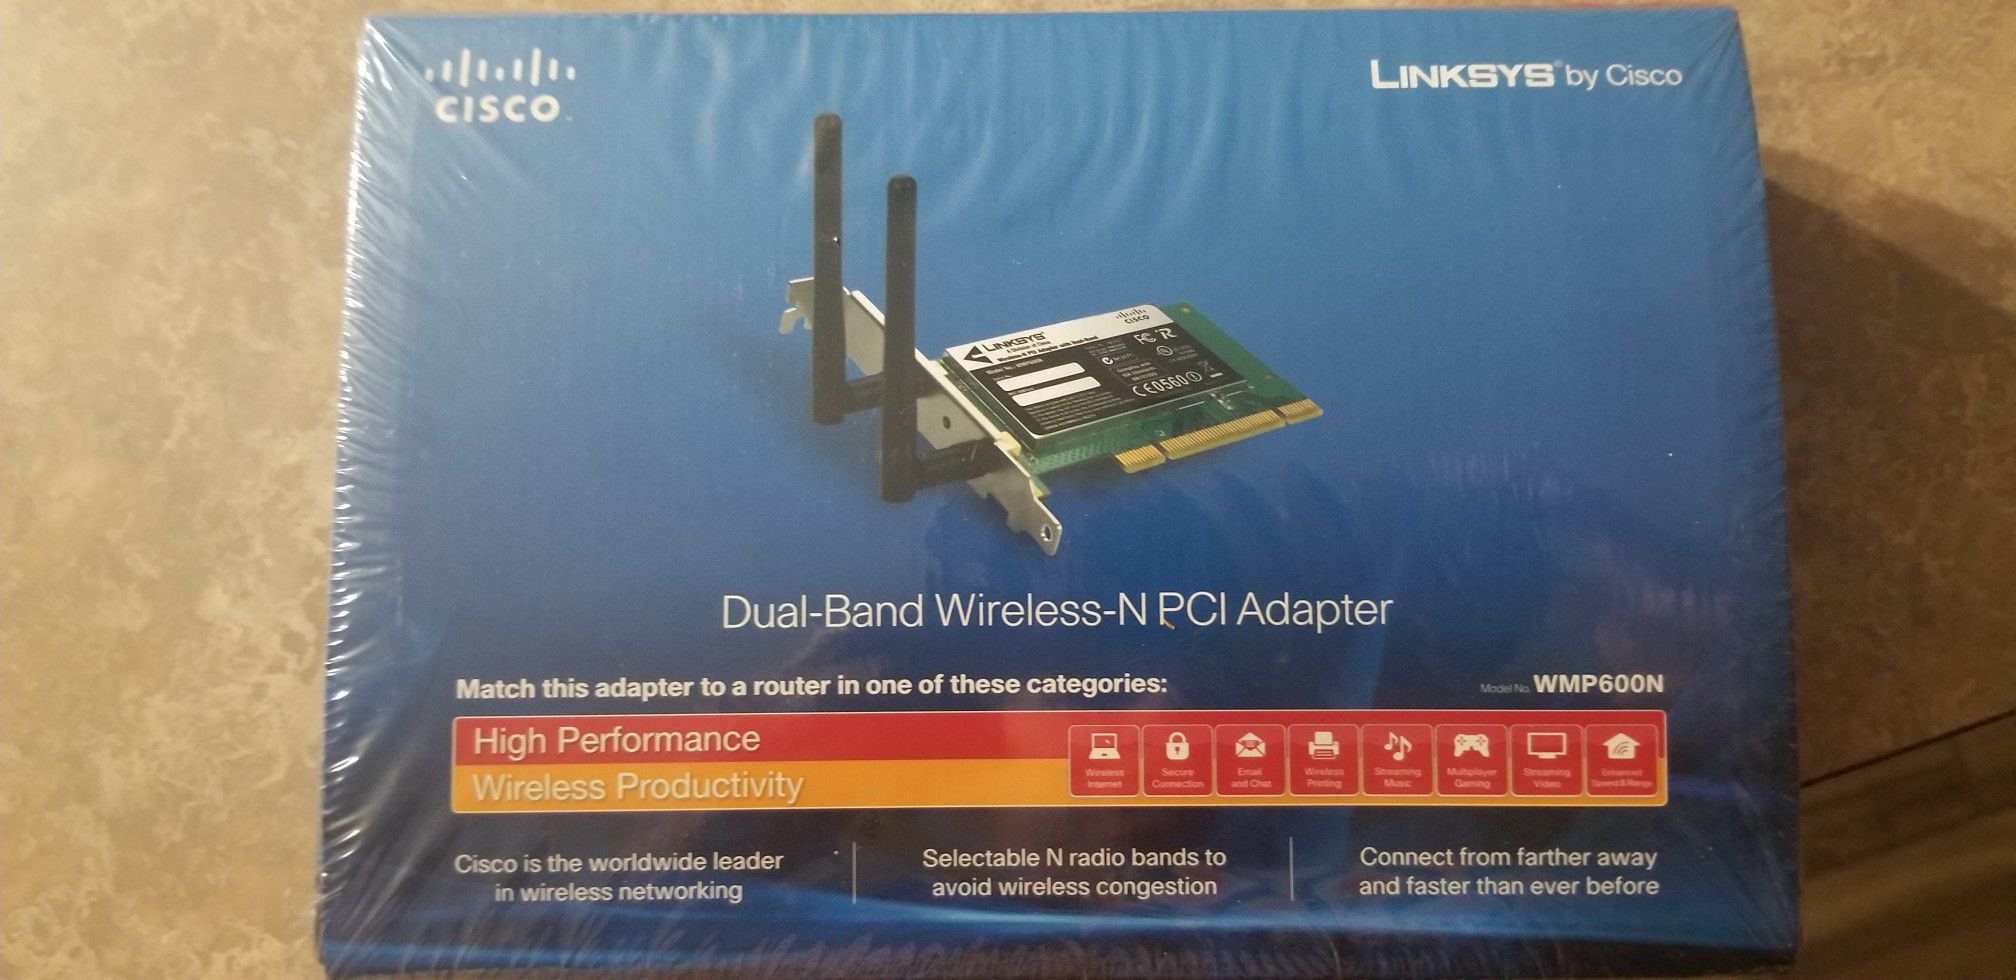 Dual-Band Wireless-N PCI Adapter WMP600N Linksys bt CISCO